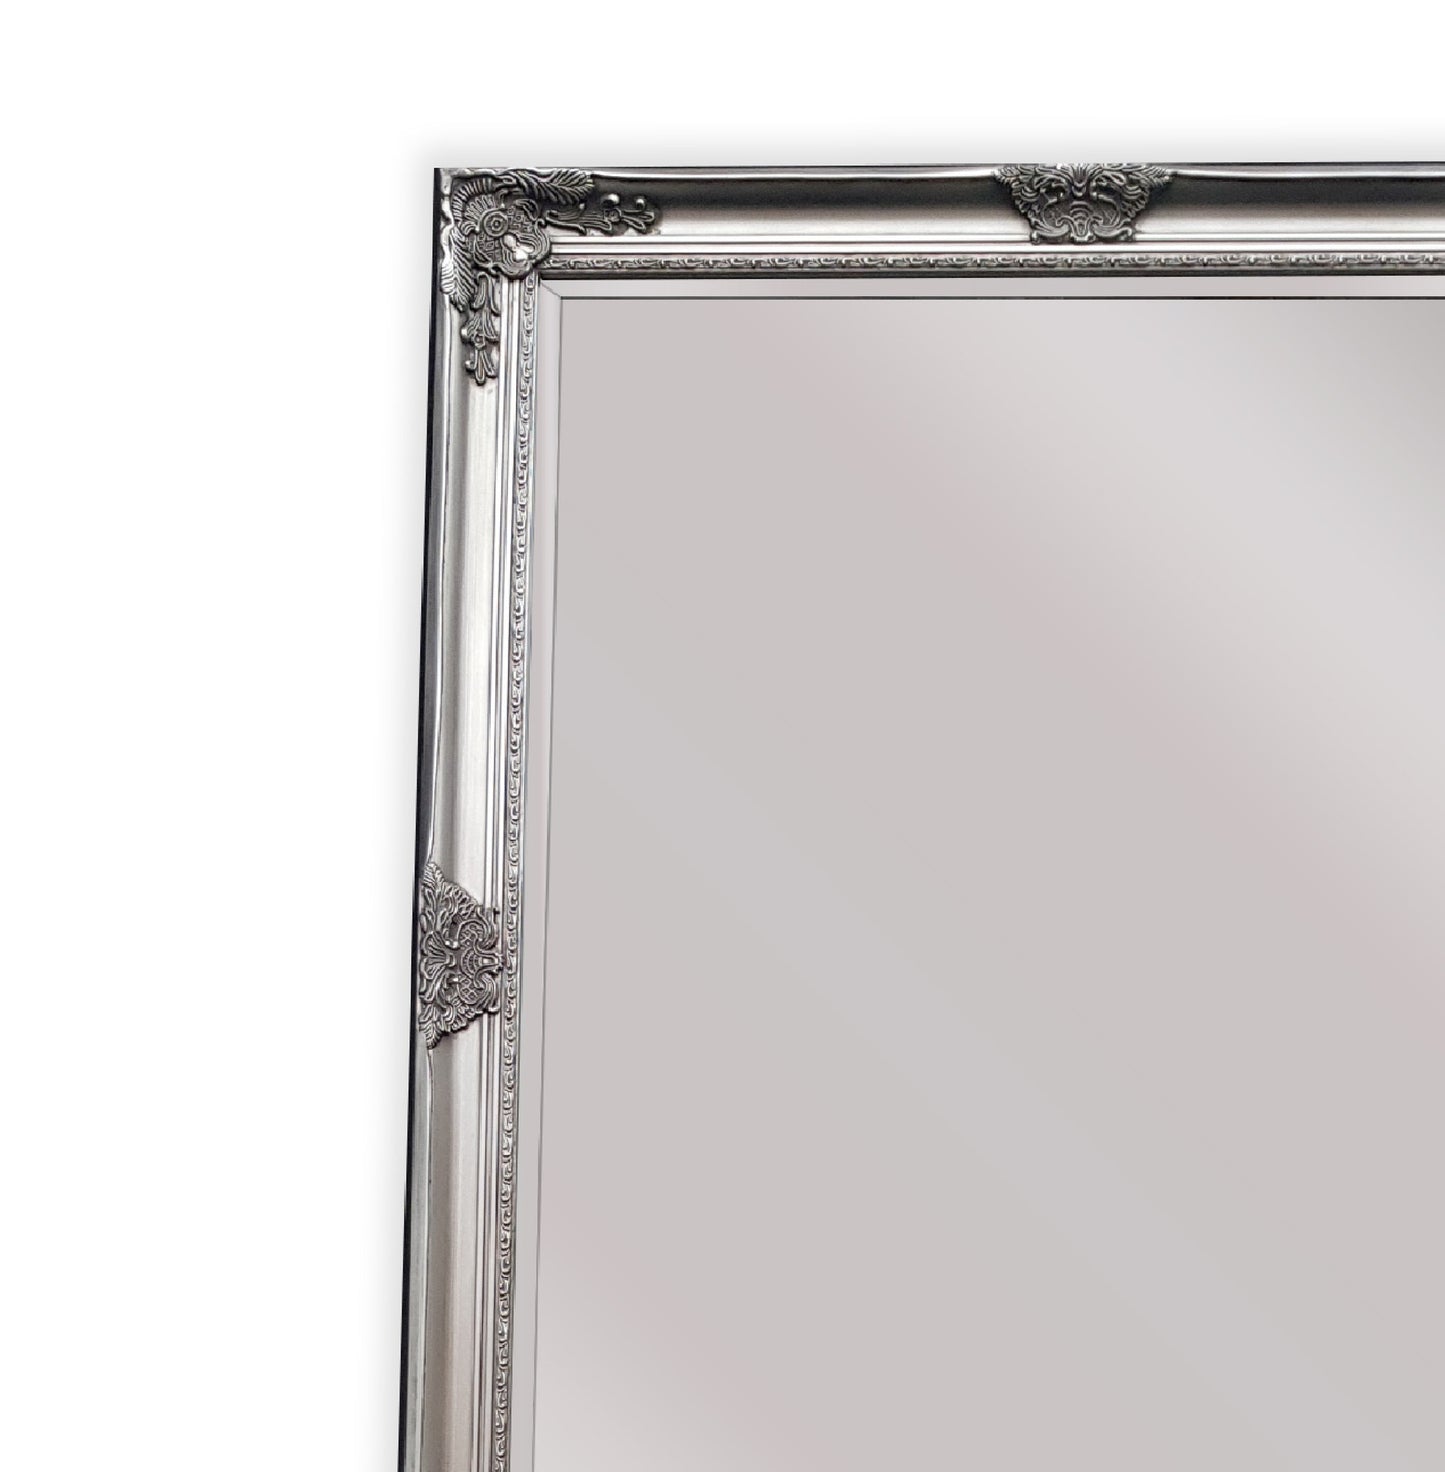 French Provincial Ornate Mirror - Antique Silver - Medium 70cm x 170cm - image2